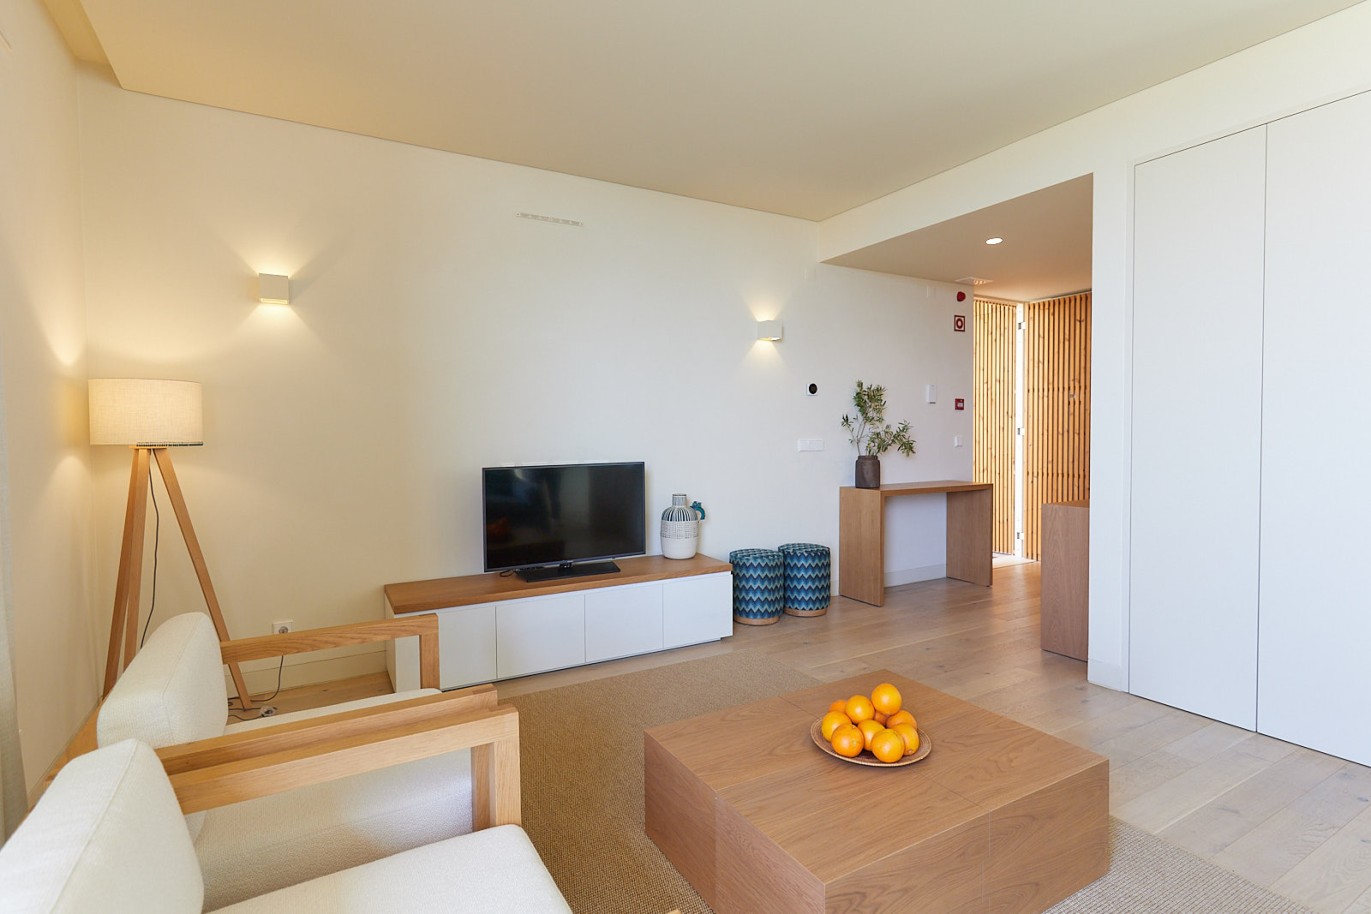 2 bedroom apartment in resort, for sale in Porches, Algarve_229195